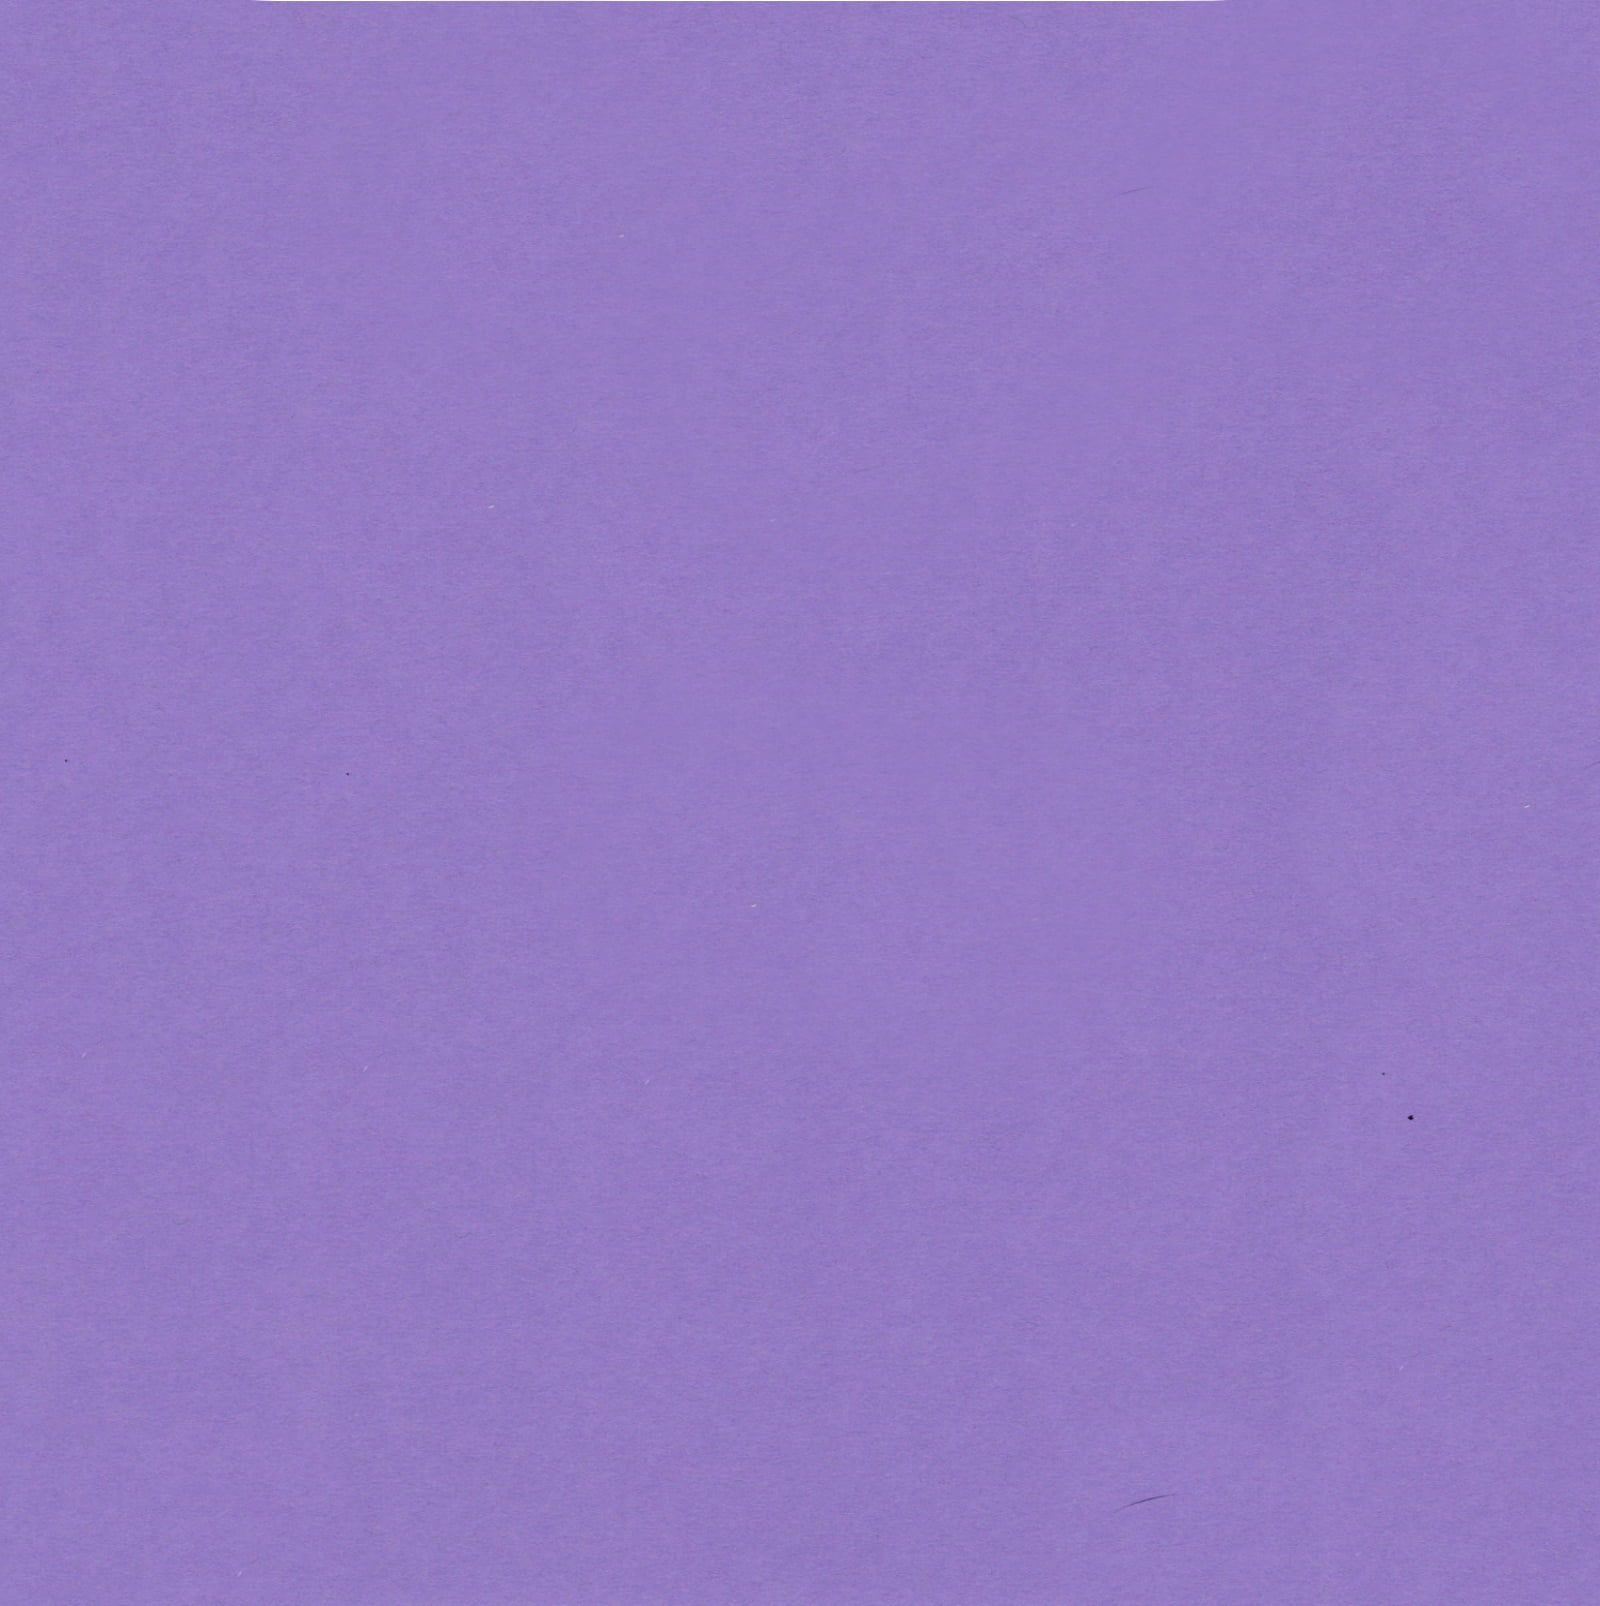 12 x 12 inch 65Lb Cover Grape Purple Cardstock 25 Sheets